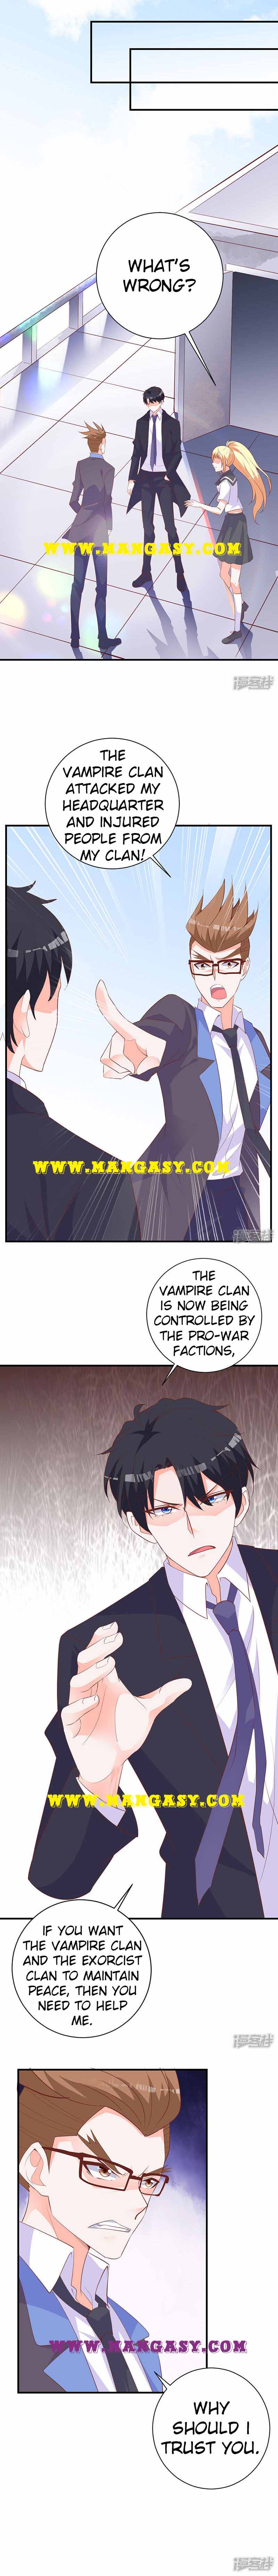 Charming Vampire Wants Me Chapter 25 - HolyManga.net